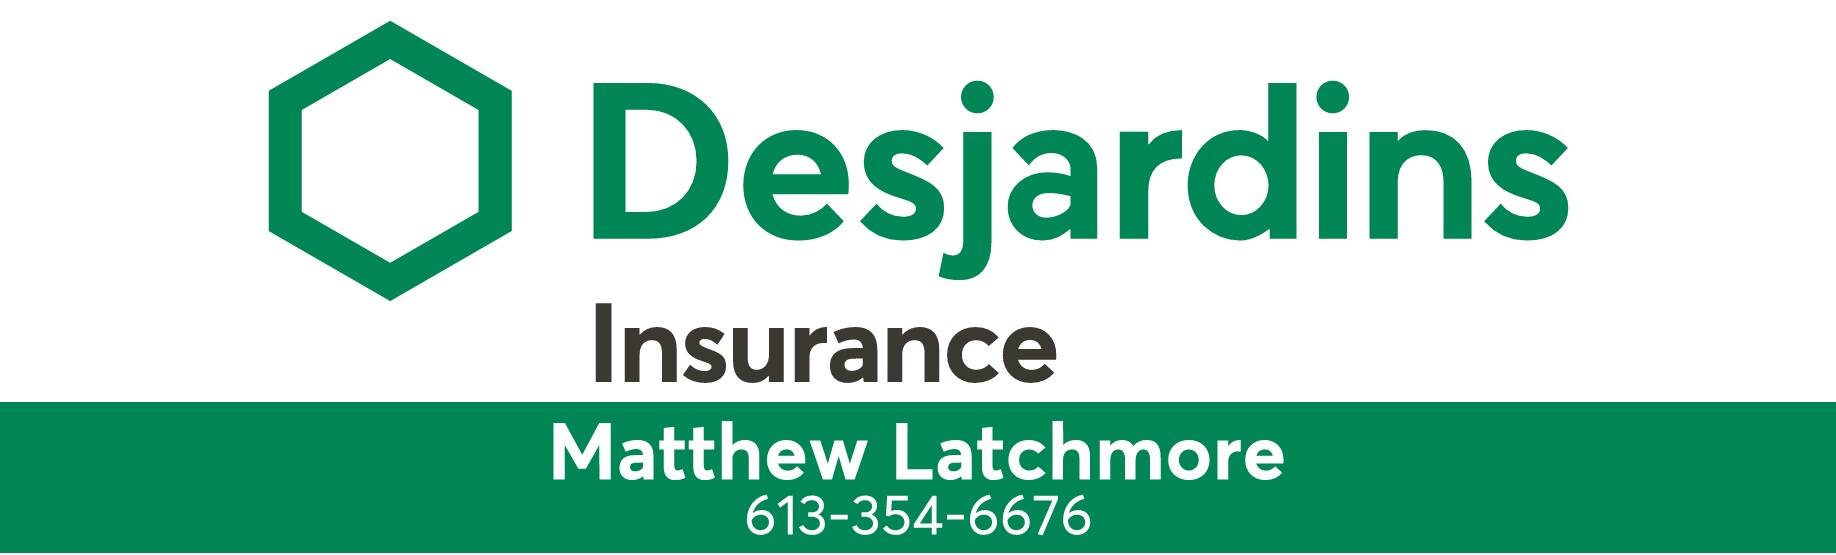 Matthew Latchmore Desjardins Insurance